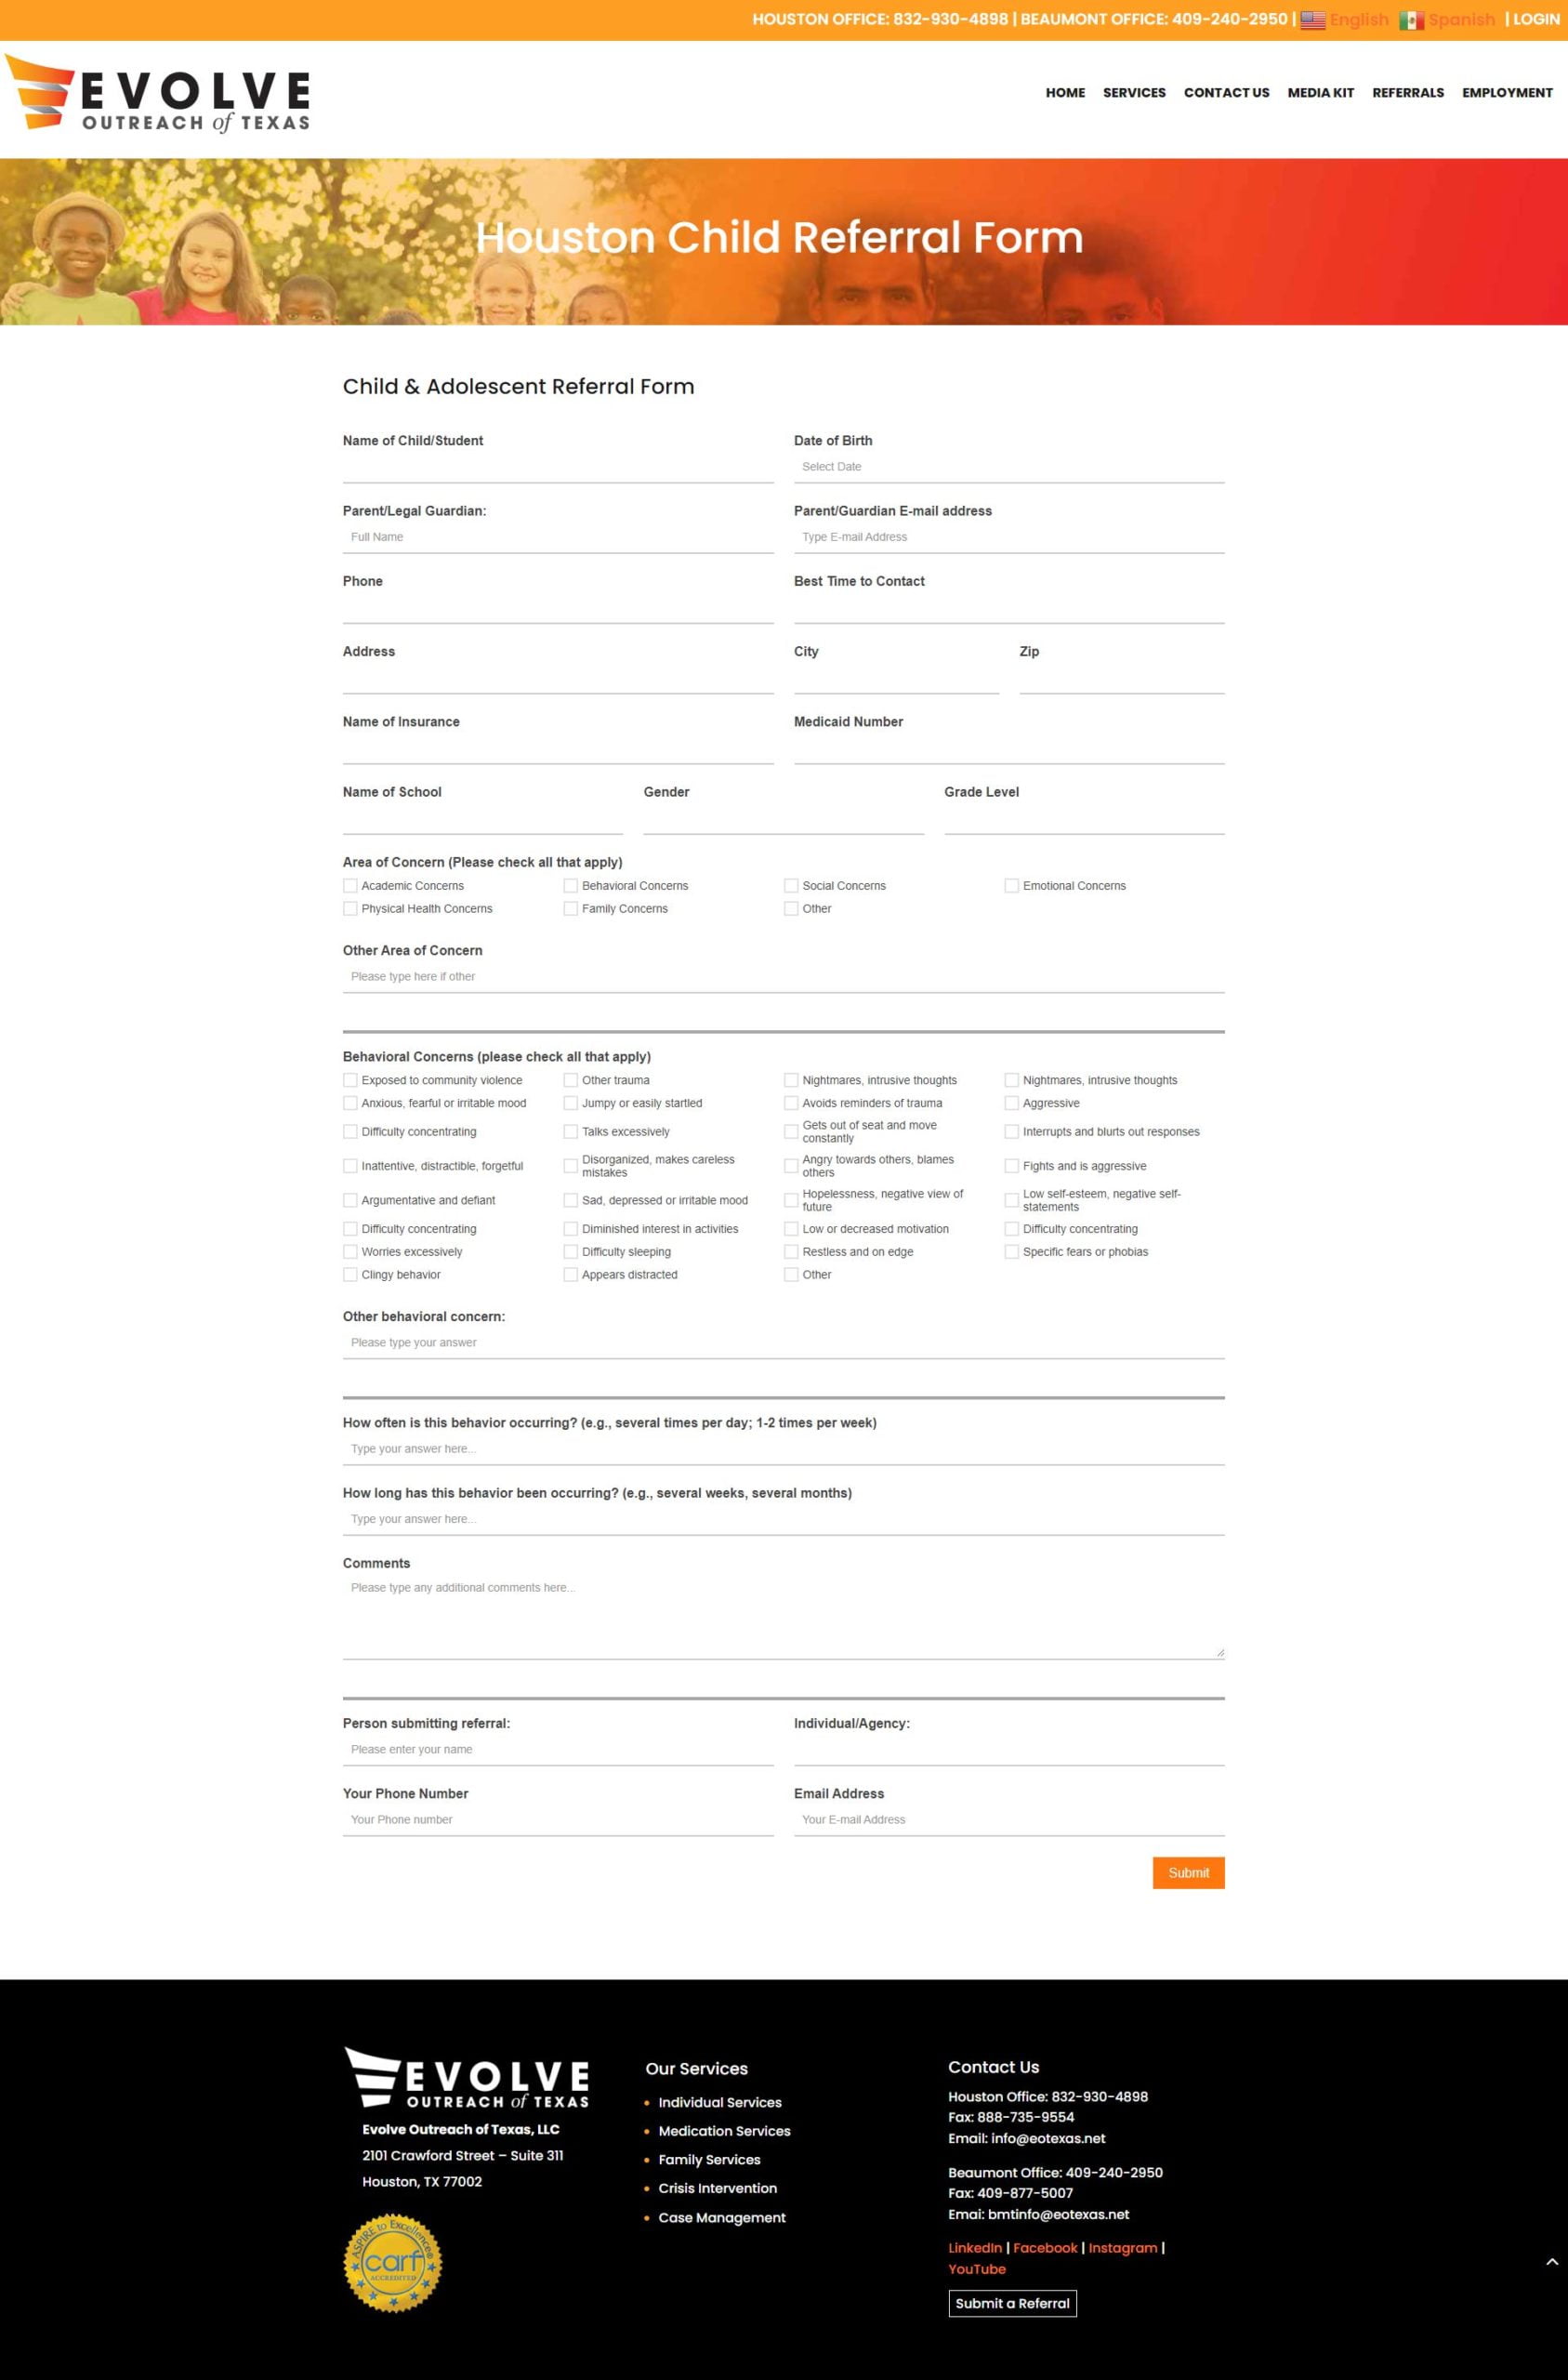 Multi-step Website Form